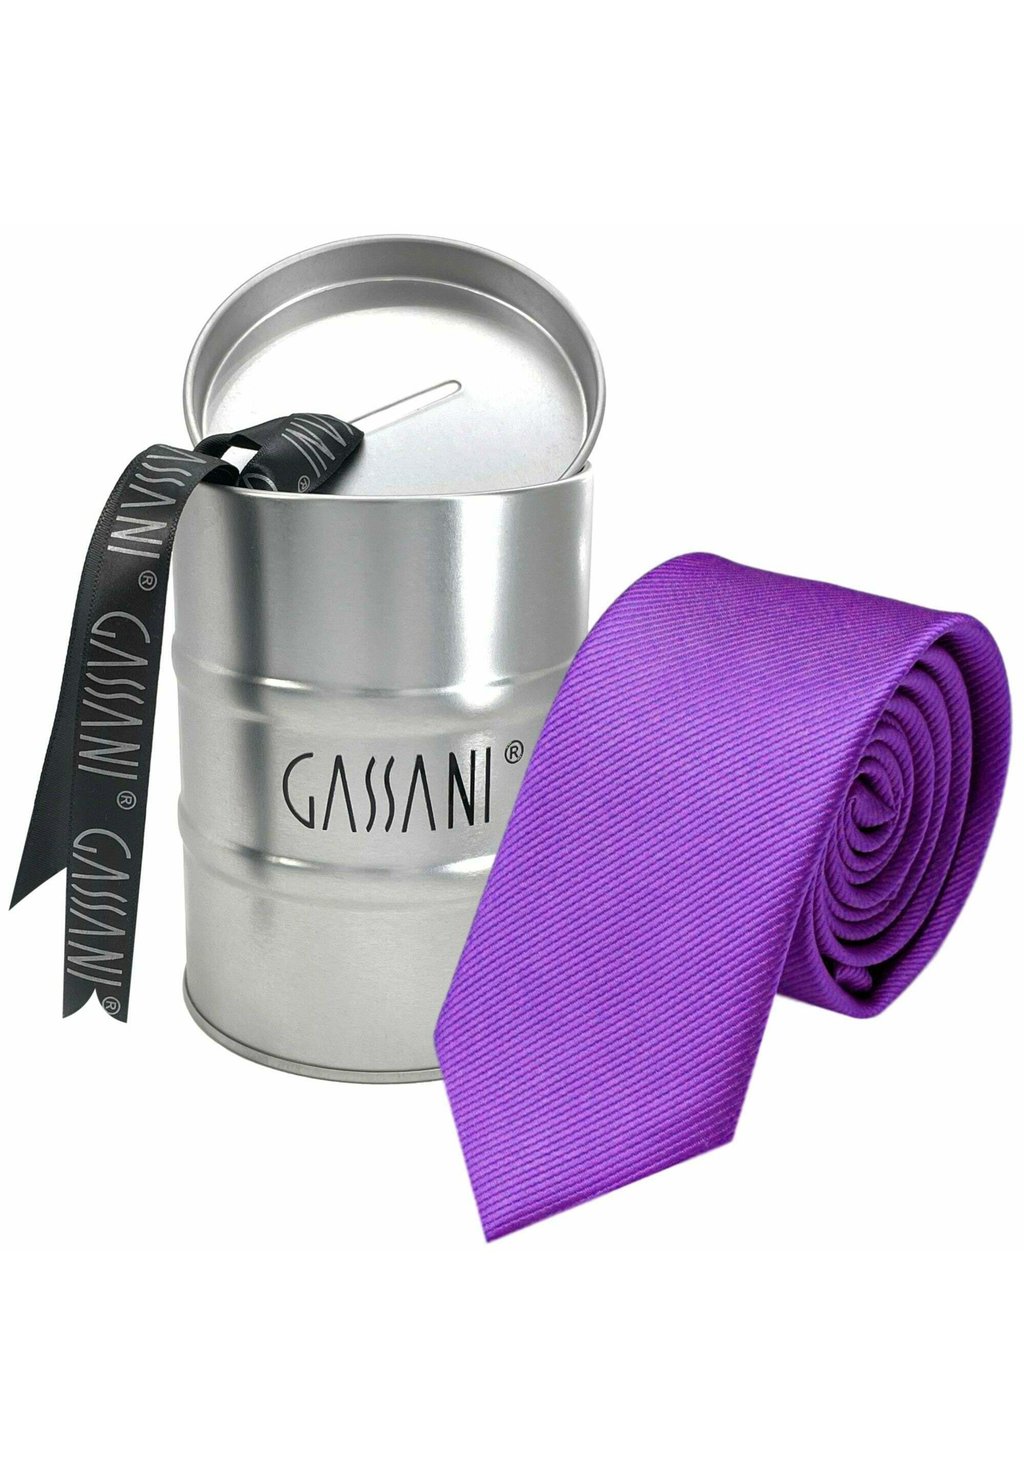 Галстук Gassani, цвет flieder-violett, lavendel, lila, blau-violett, mauve